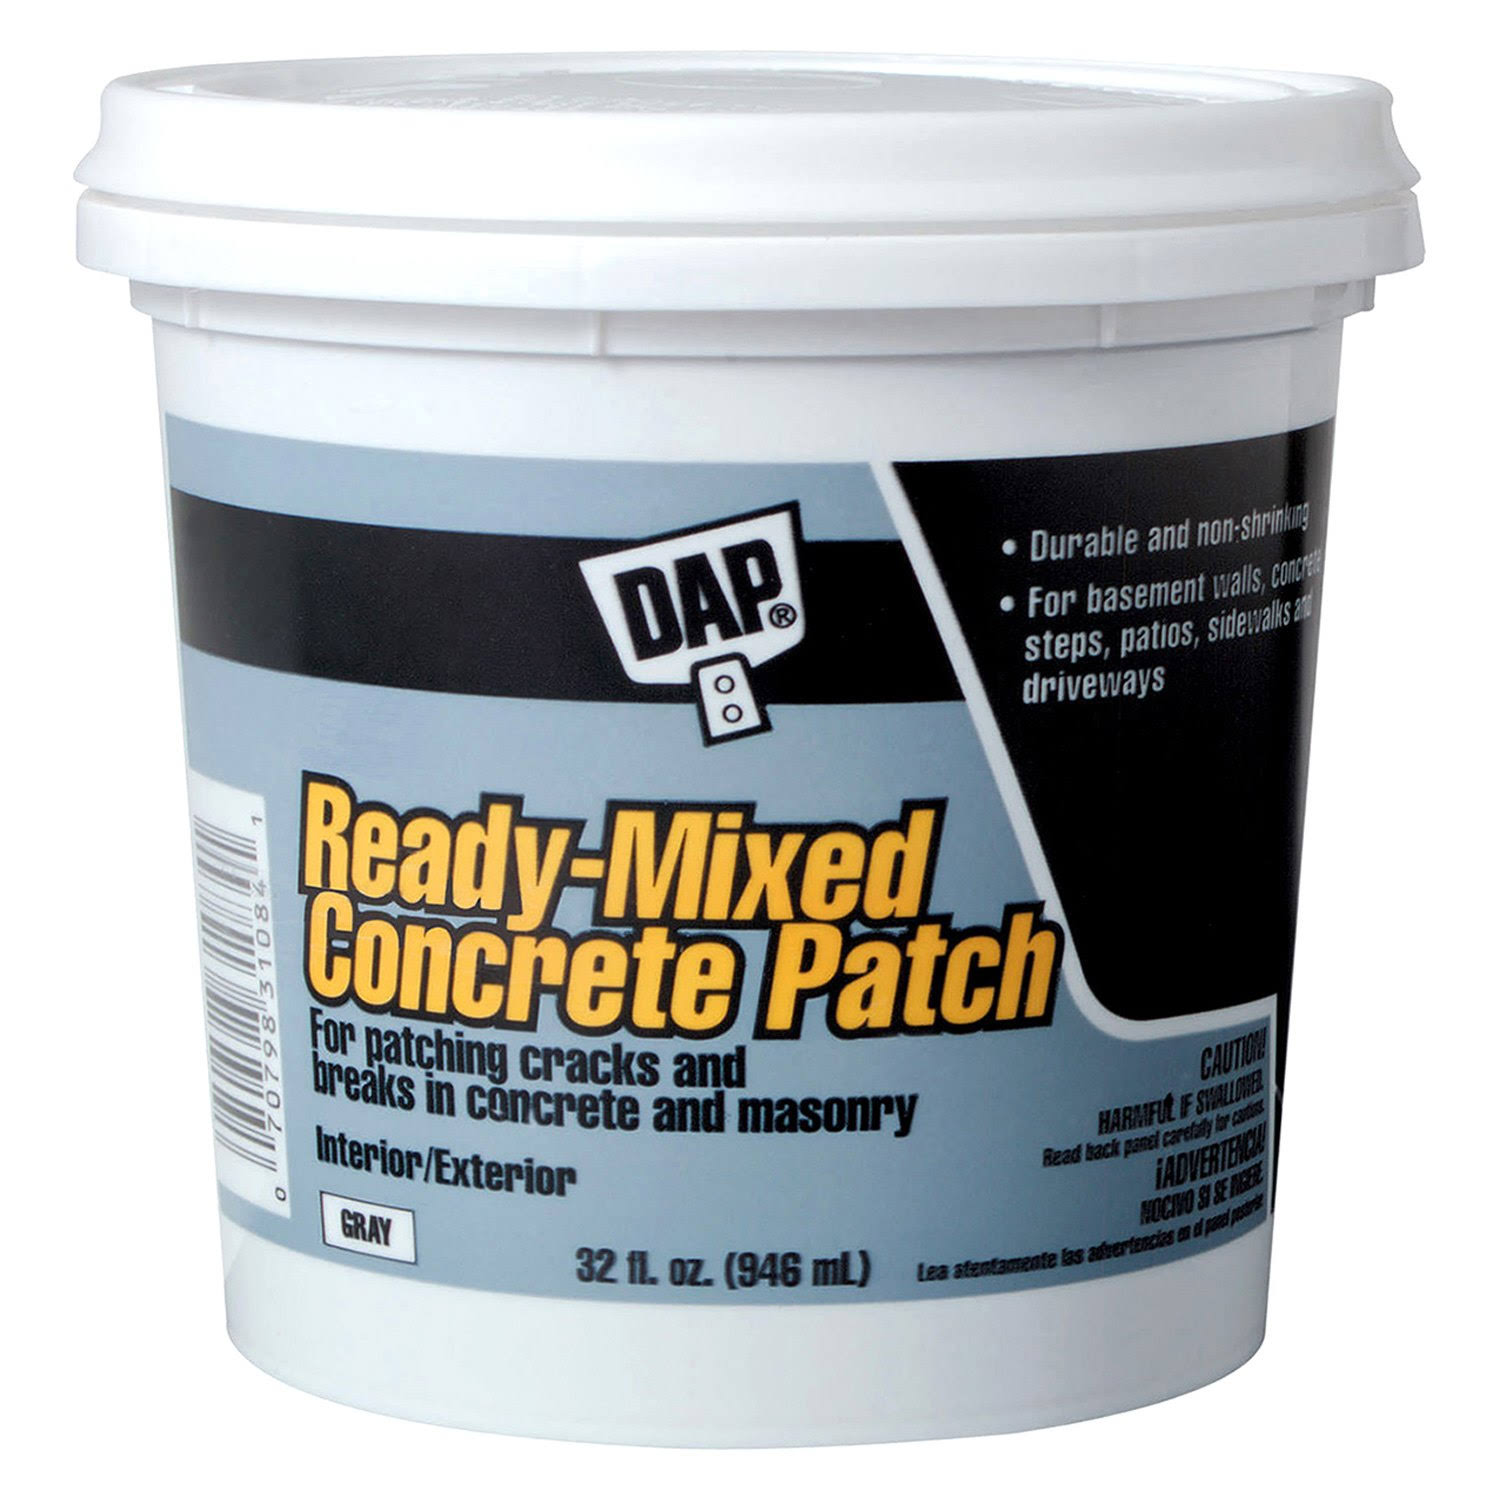 Dap Ready-Mixed Concrete Patch - Grey